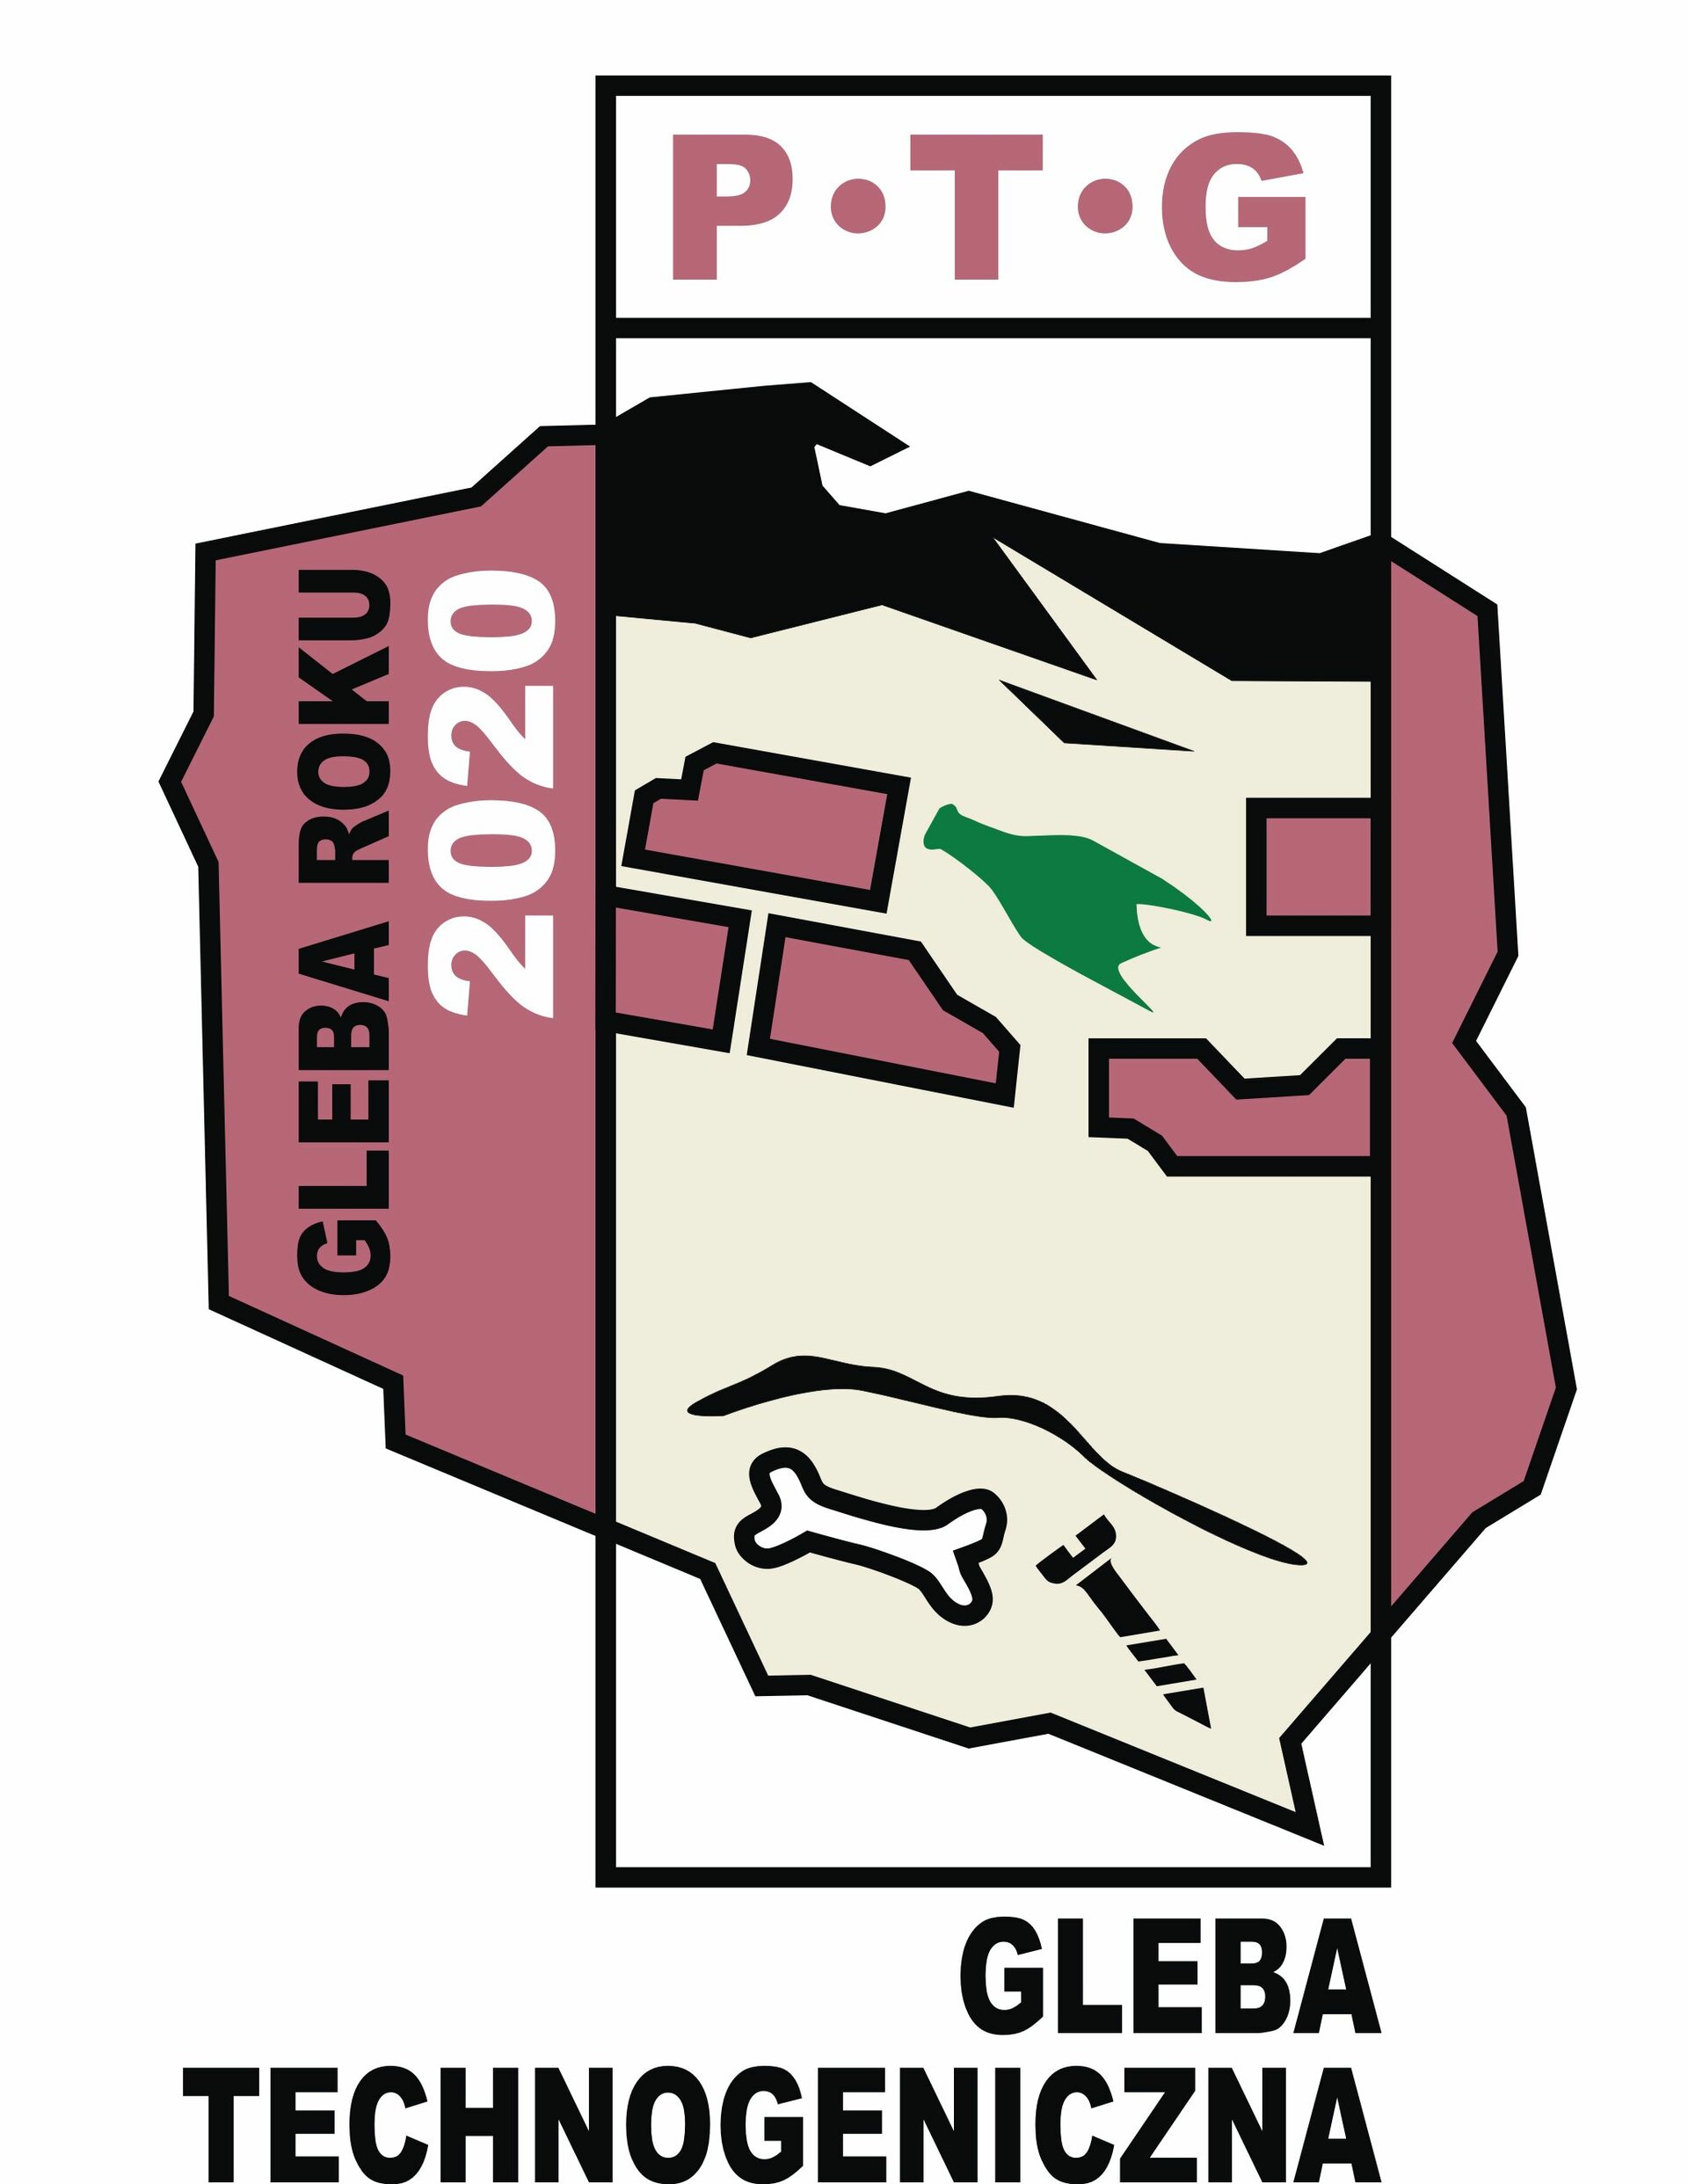 Gleba technogeniczna logo